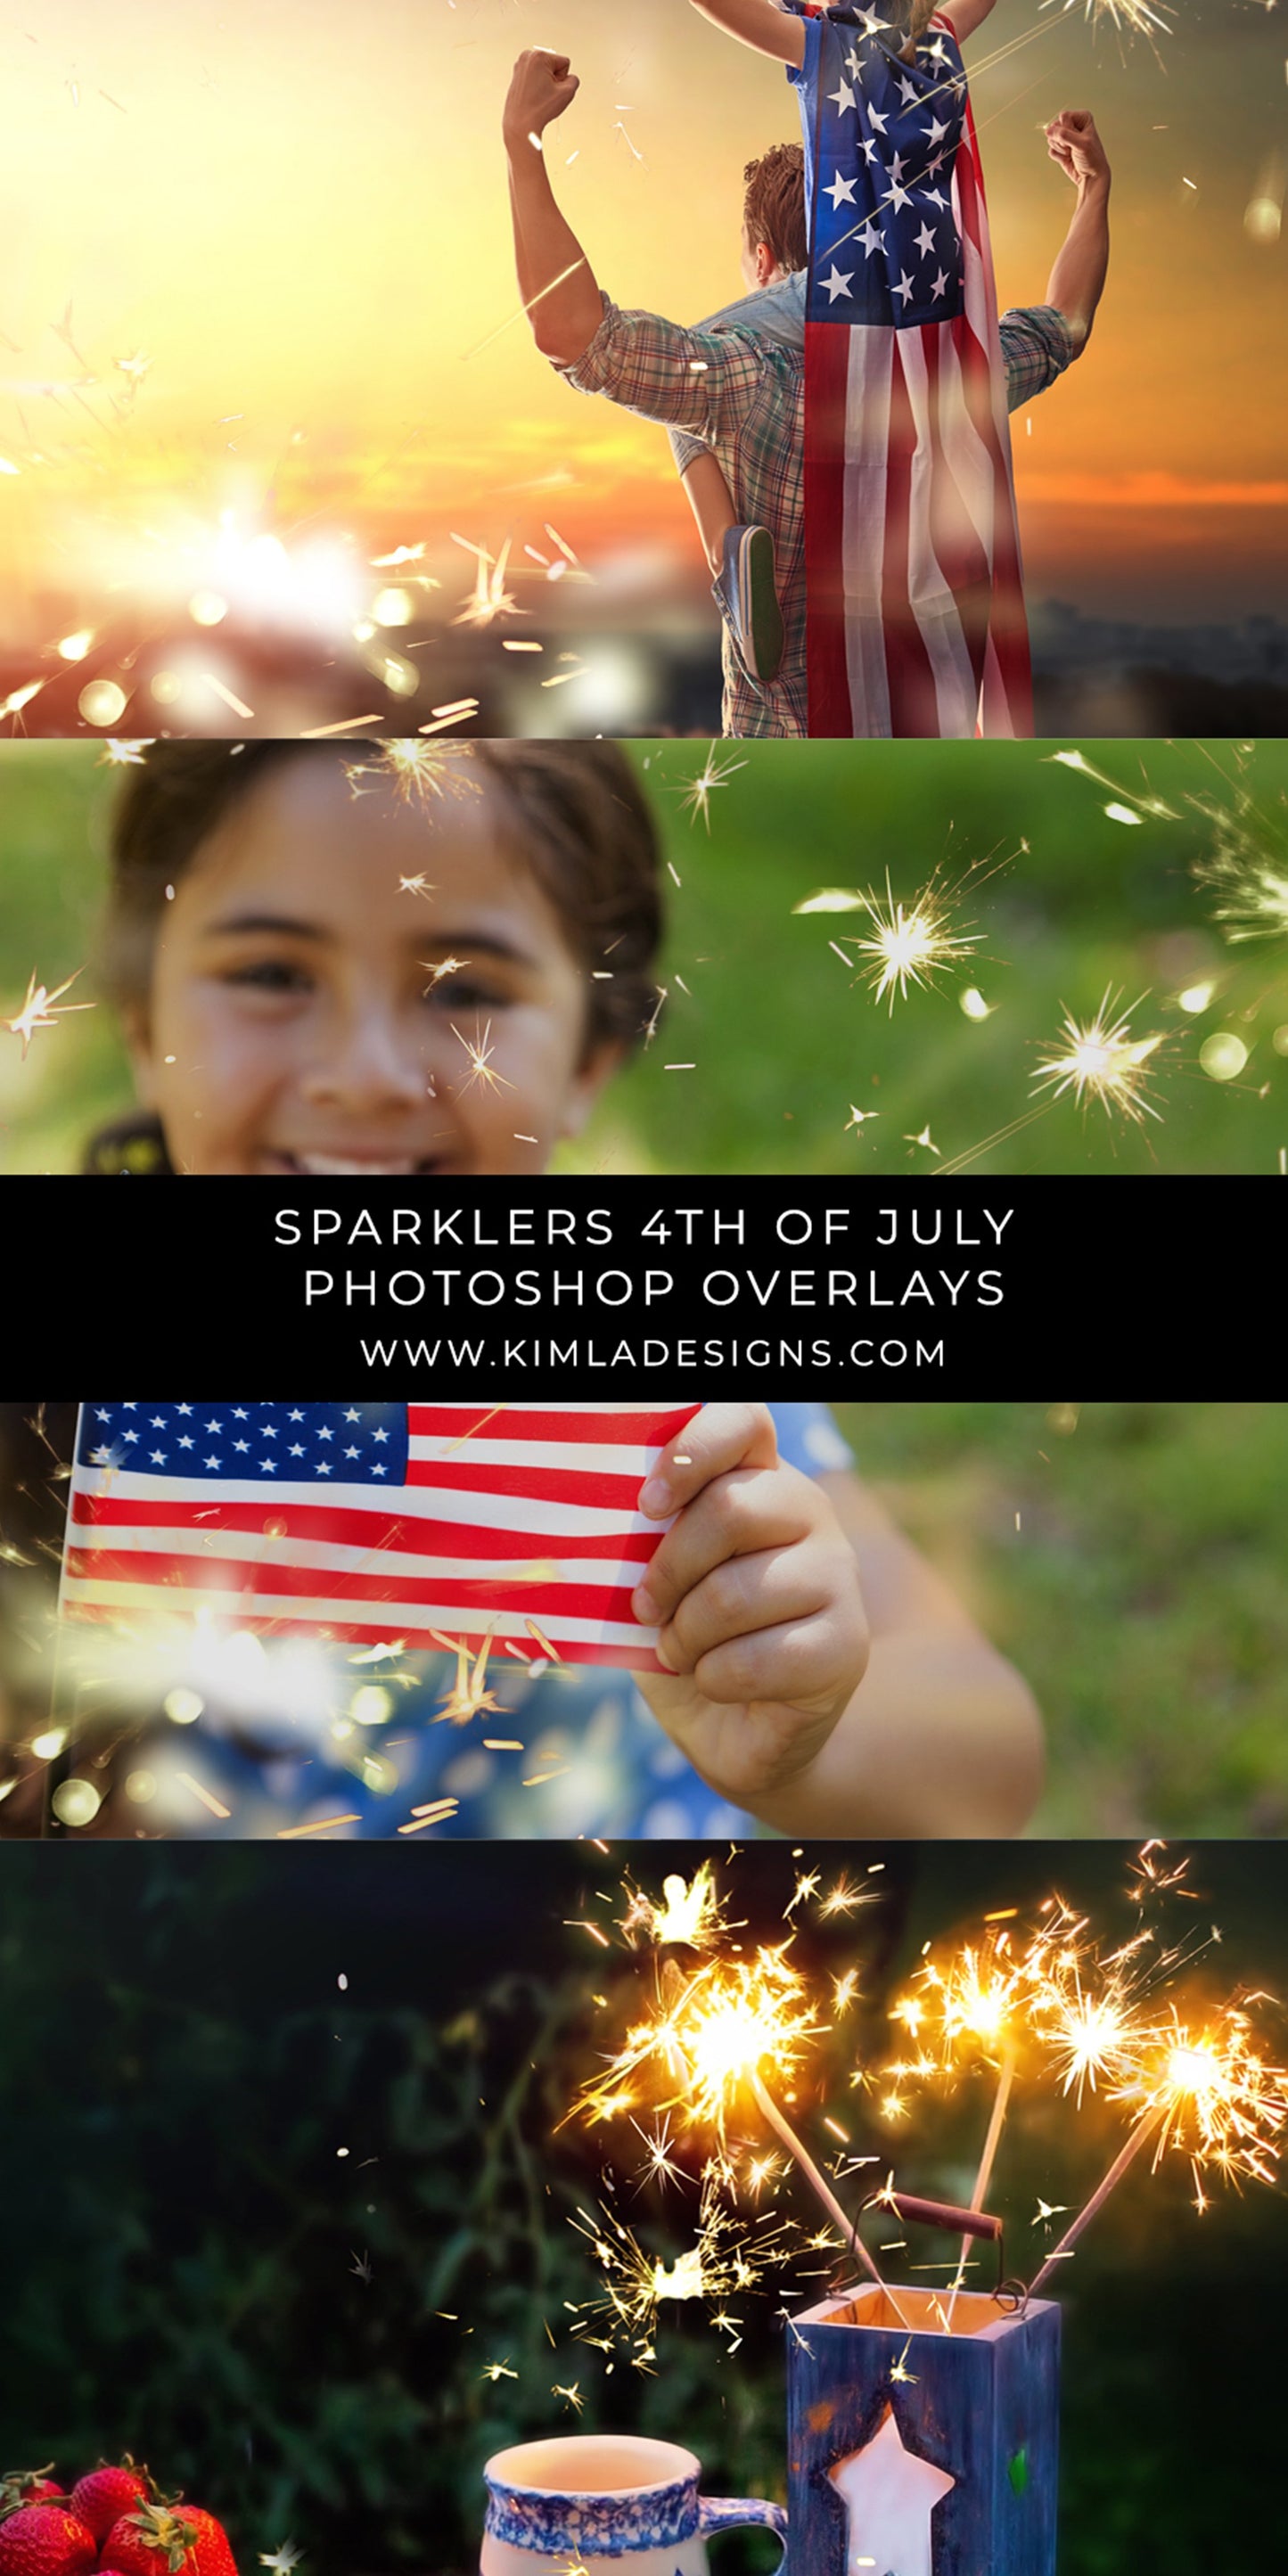 Sparklers 4th of July Photo Overlays - Photoshop Overlays, Digital Backgrounds and Lightroom Presets